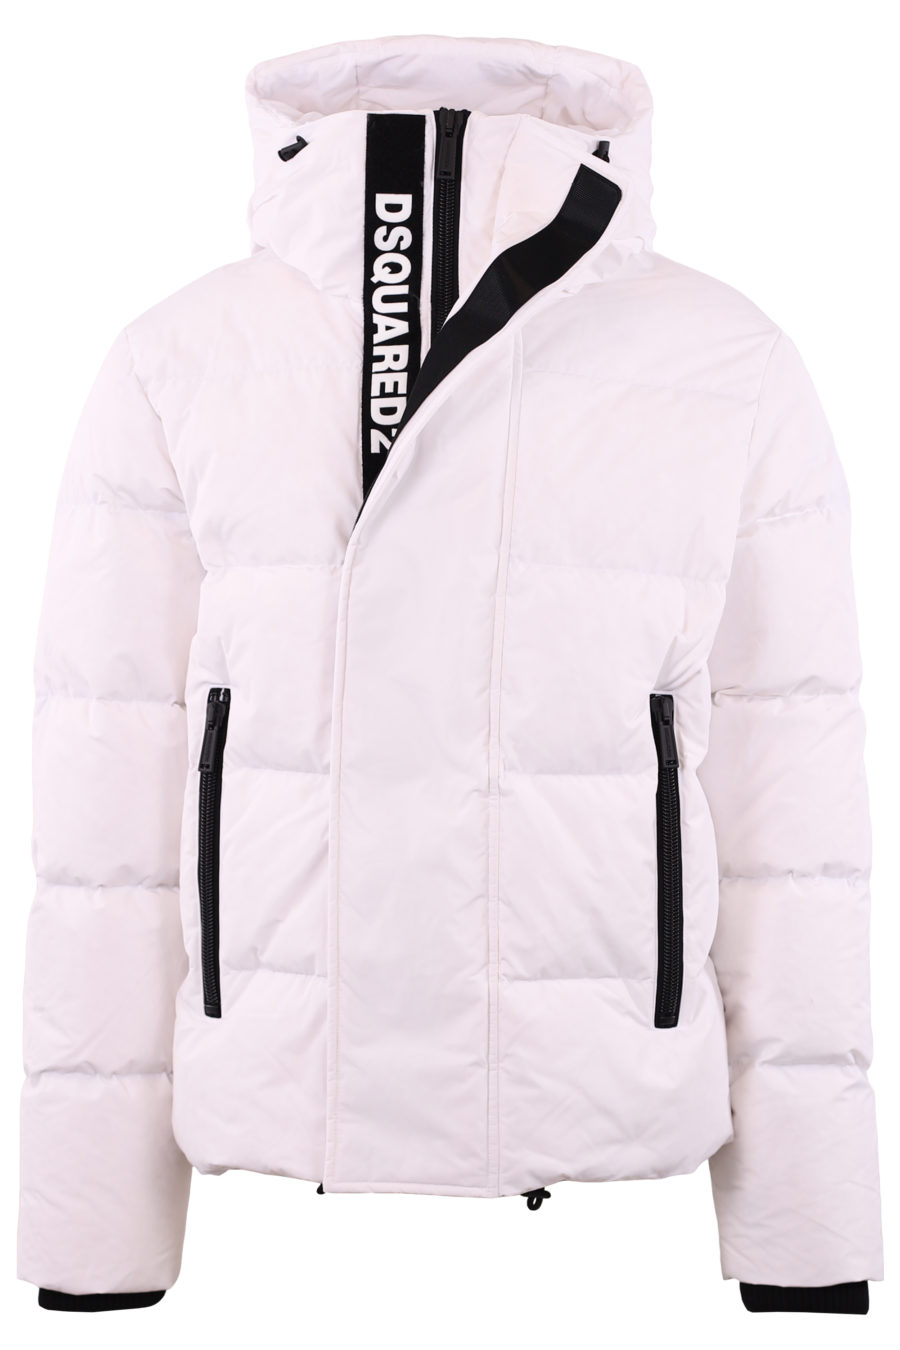 White jacket with logo on the zip - IMG 7244